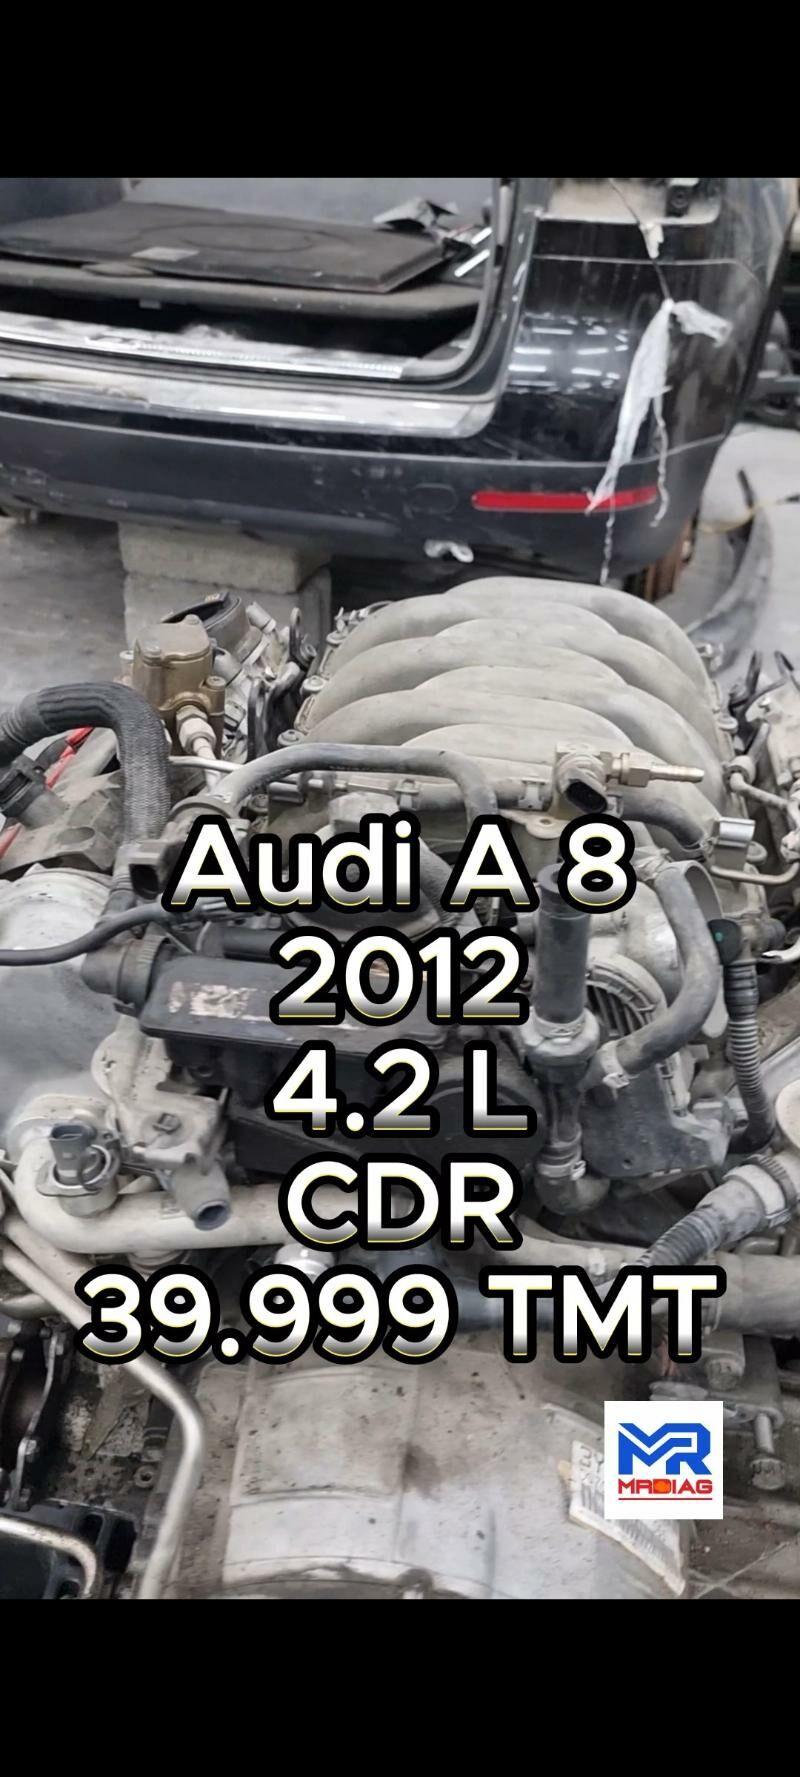 Моторы BMW,Audi,VW 13 999 TMT - 6 мкр - img 2